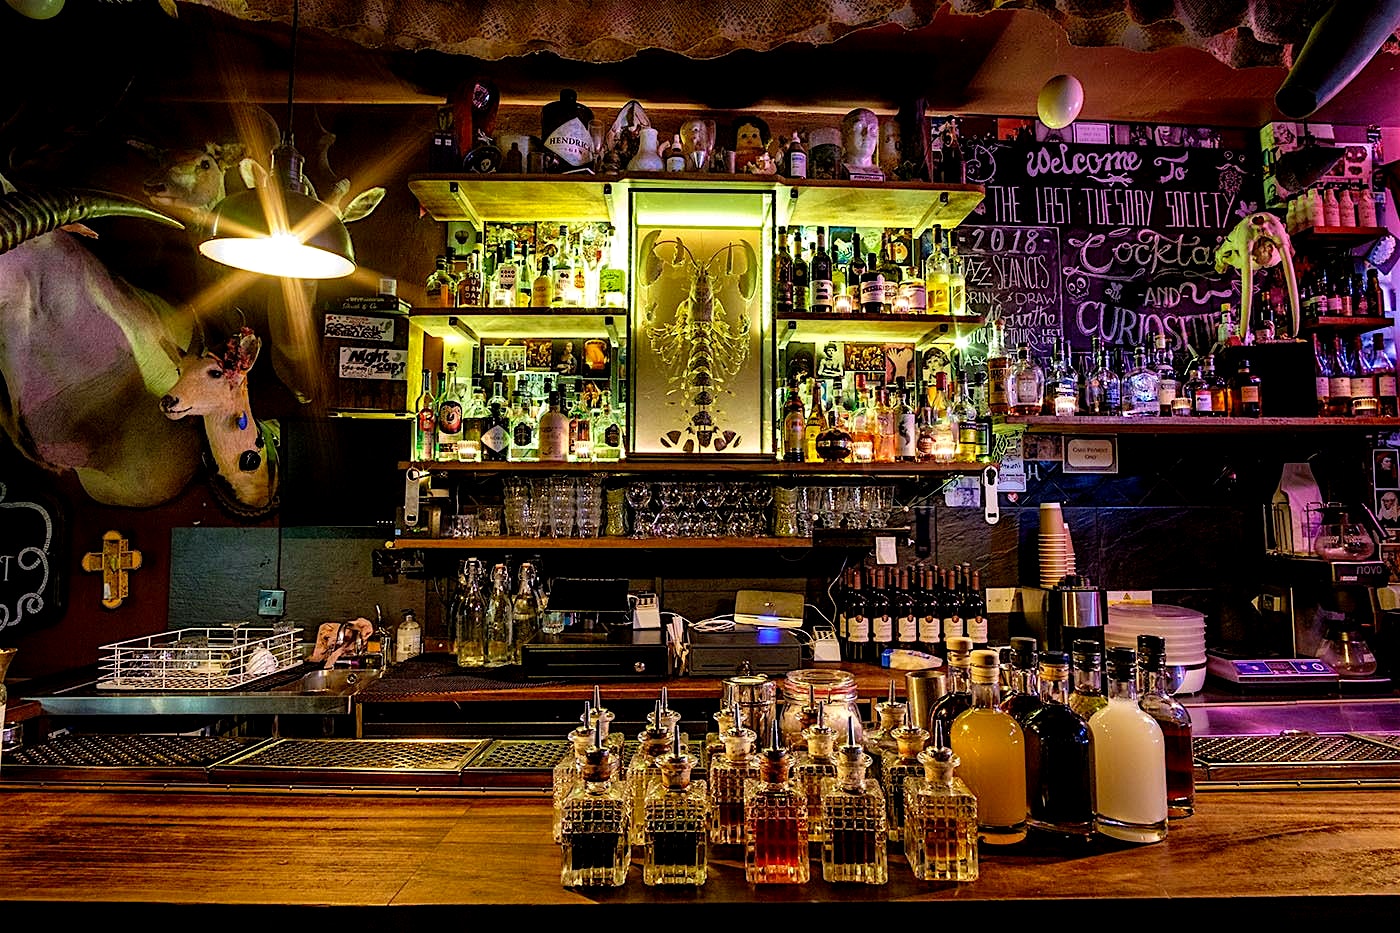 the-last-tuesday-society-absinthe-parlour-hackney-london-bar-interior-1